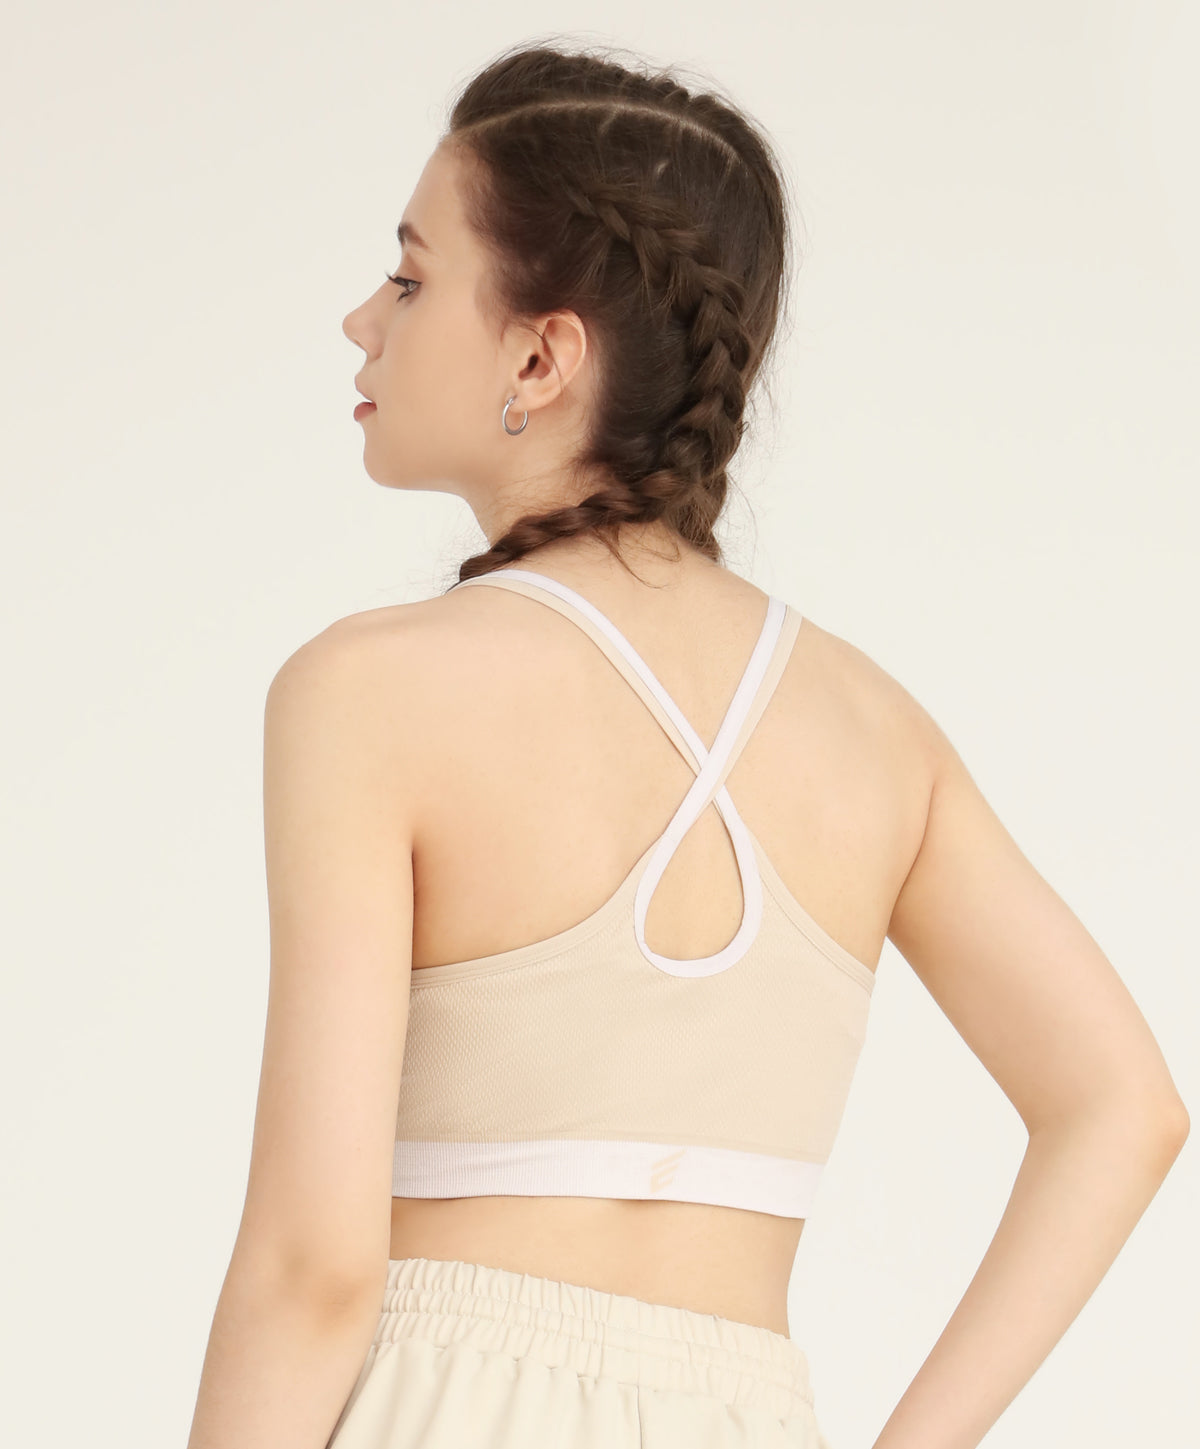 Pierre Cardin Sporty cotton bra with outer elastic - women's bra